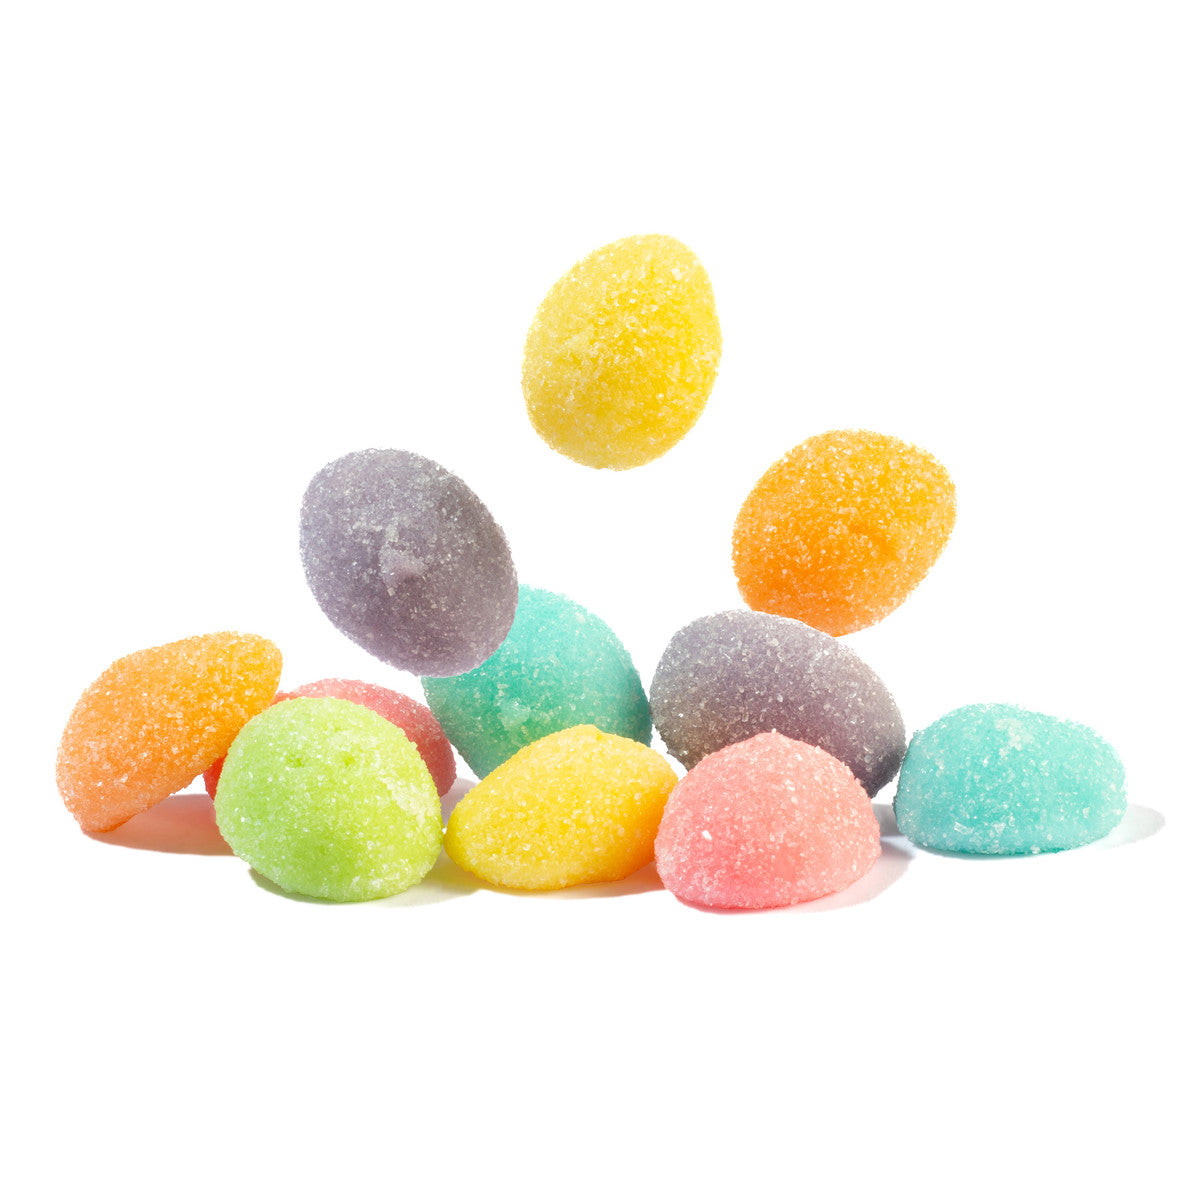 Sugar Sanded Gummi Eggs- 4 oz bag